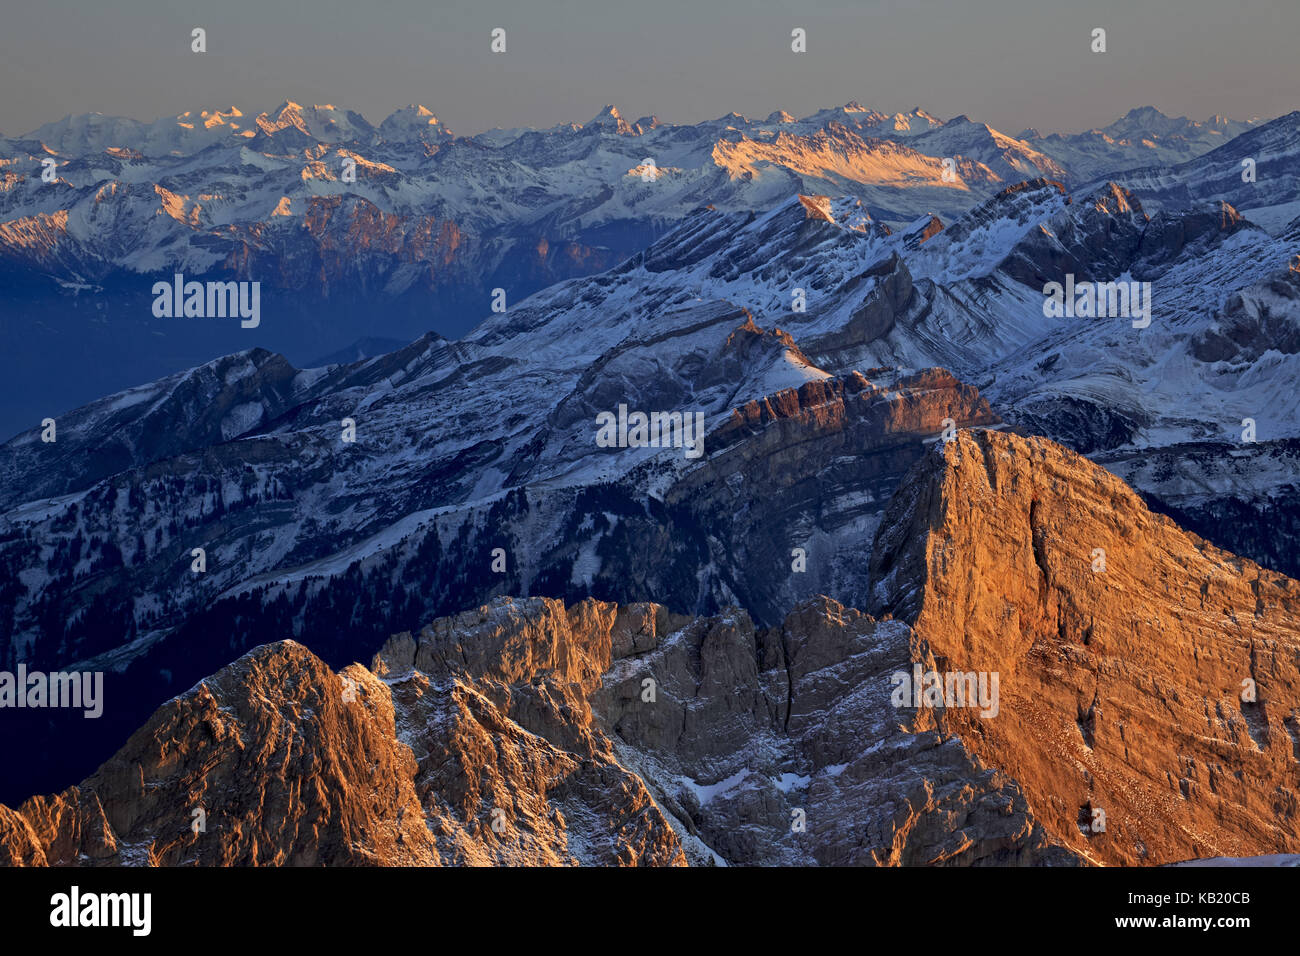 La Svizzera, Appenzell, Appenzeller paese, alp massiccio di pietra, Säntis, vista nella direzione del sud, il Piz Palü, Piz Zupo, il Piz Bernina Piz Roseg, Piz Äla, Alivier, Piz d'err, Monte Disgrazia, Foto Stock